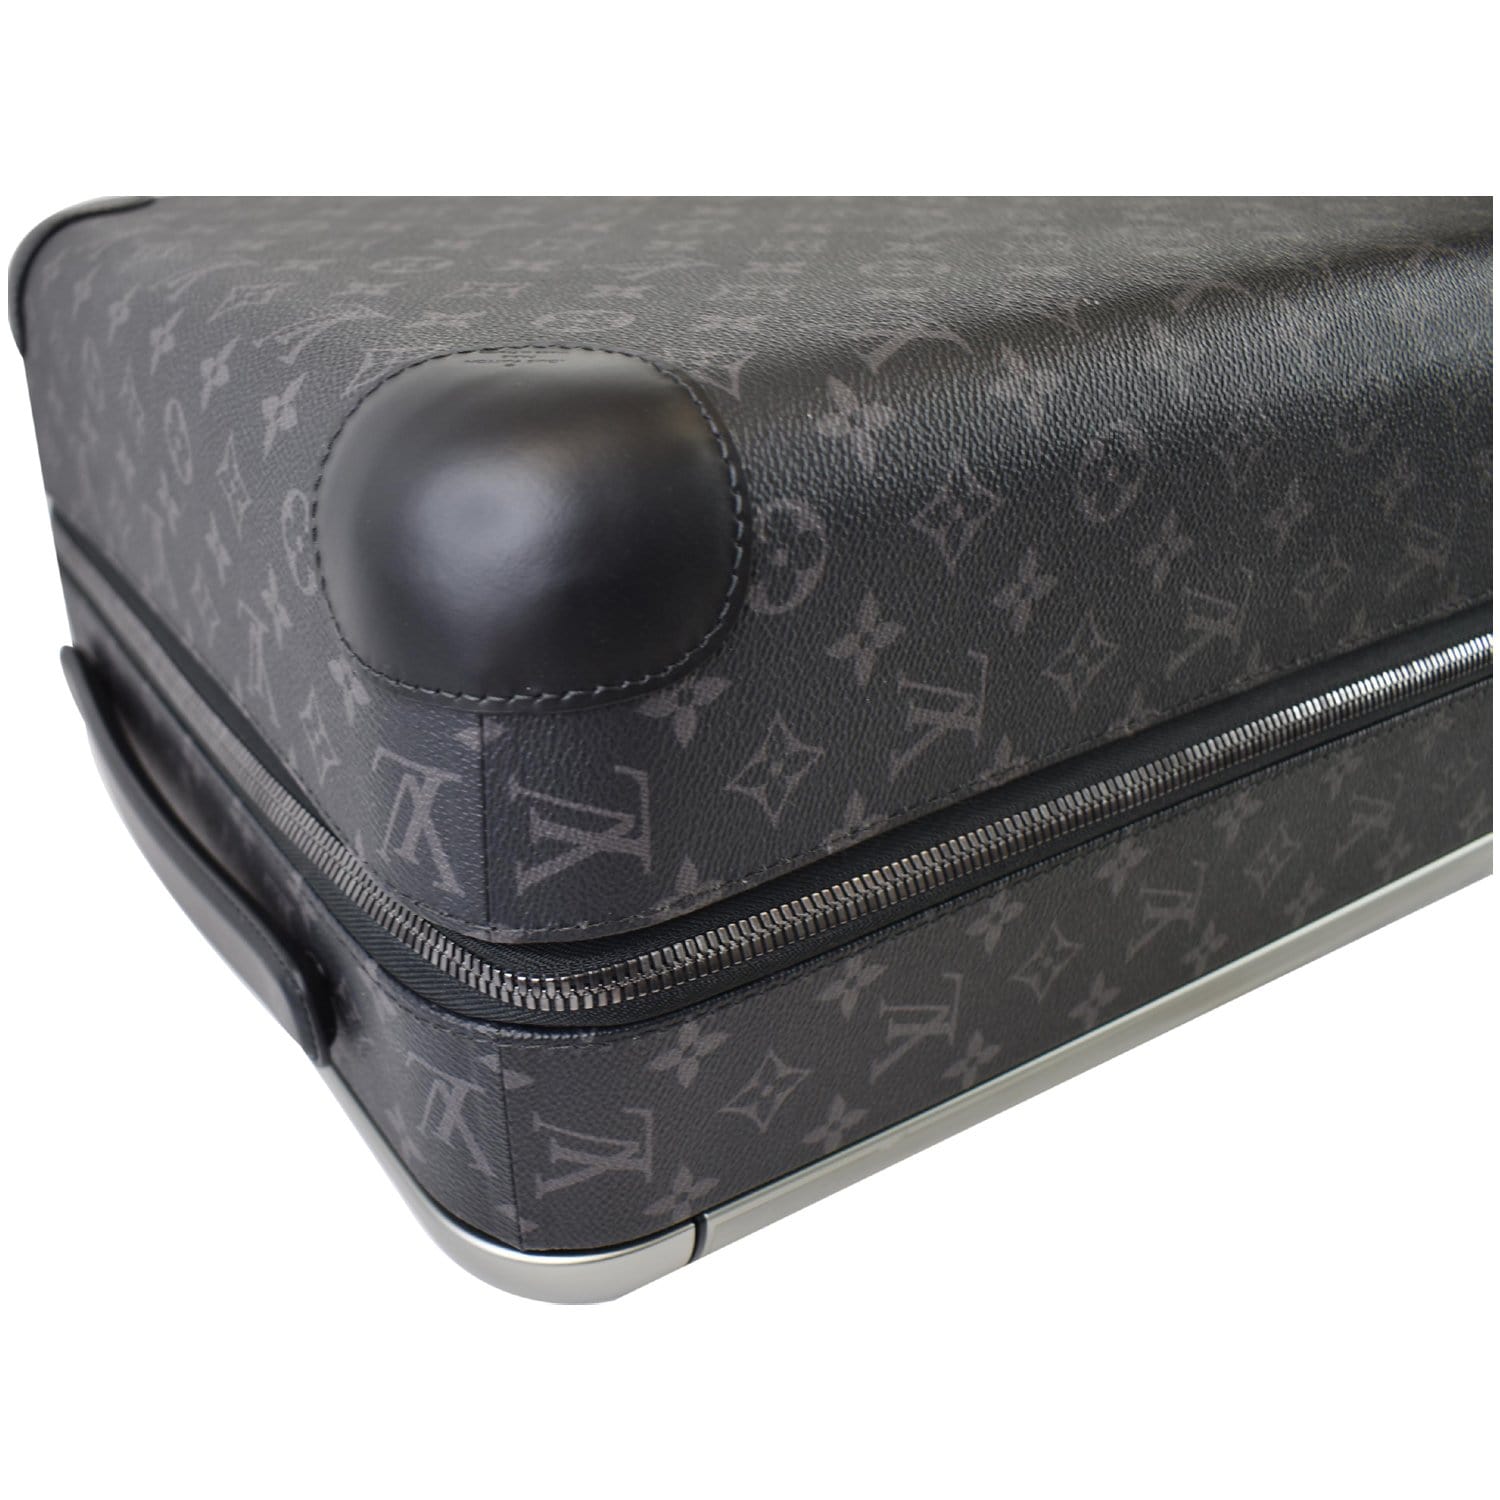 Horizon 55 leather travel bag Louis Vuitton Black in Leather